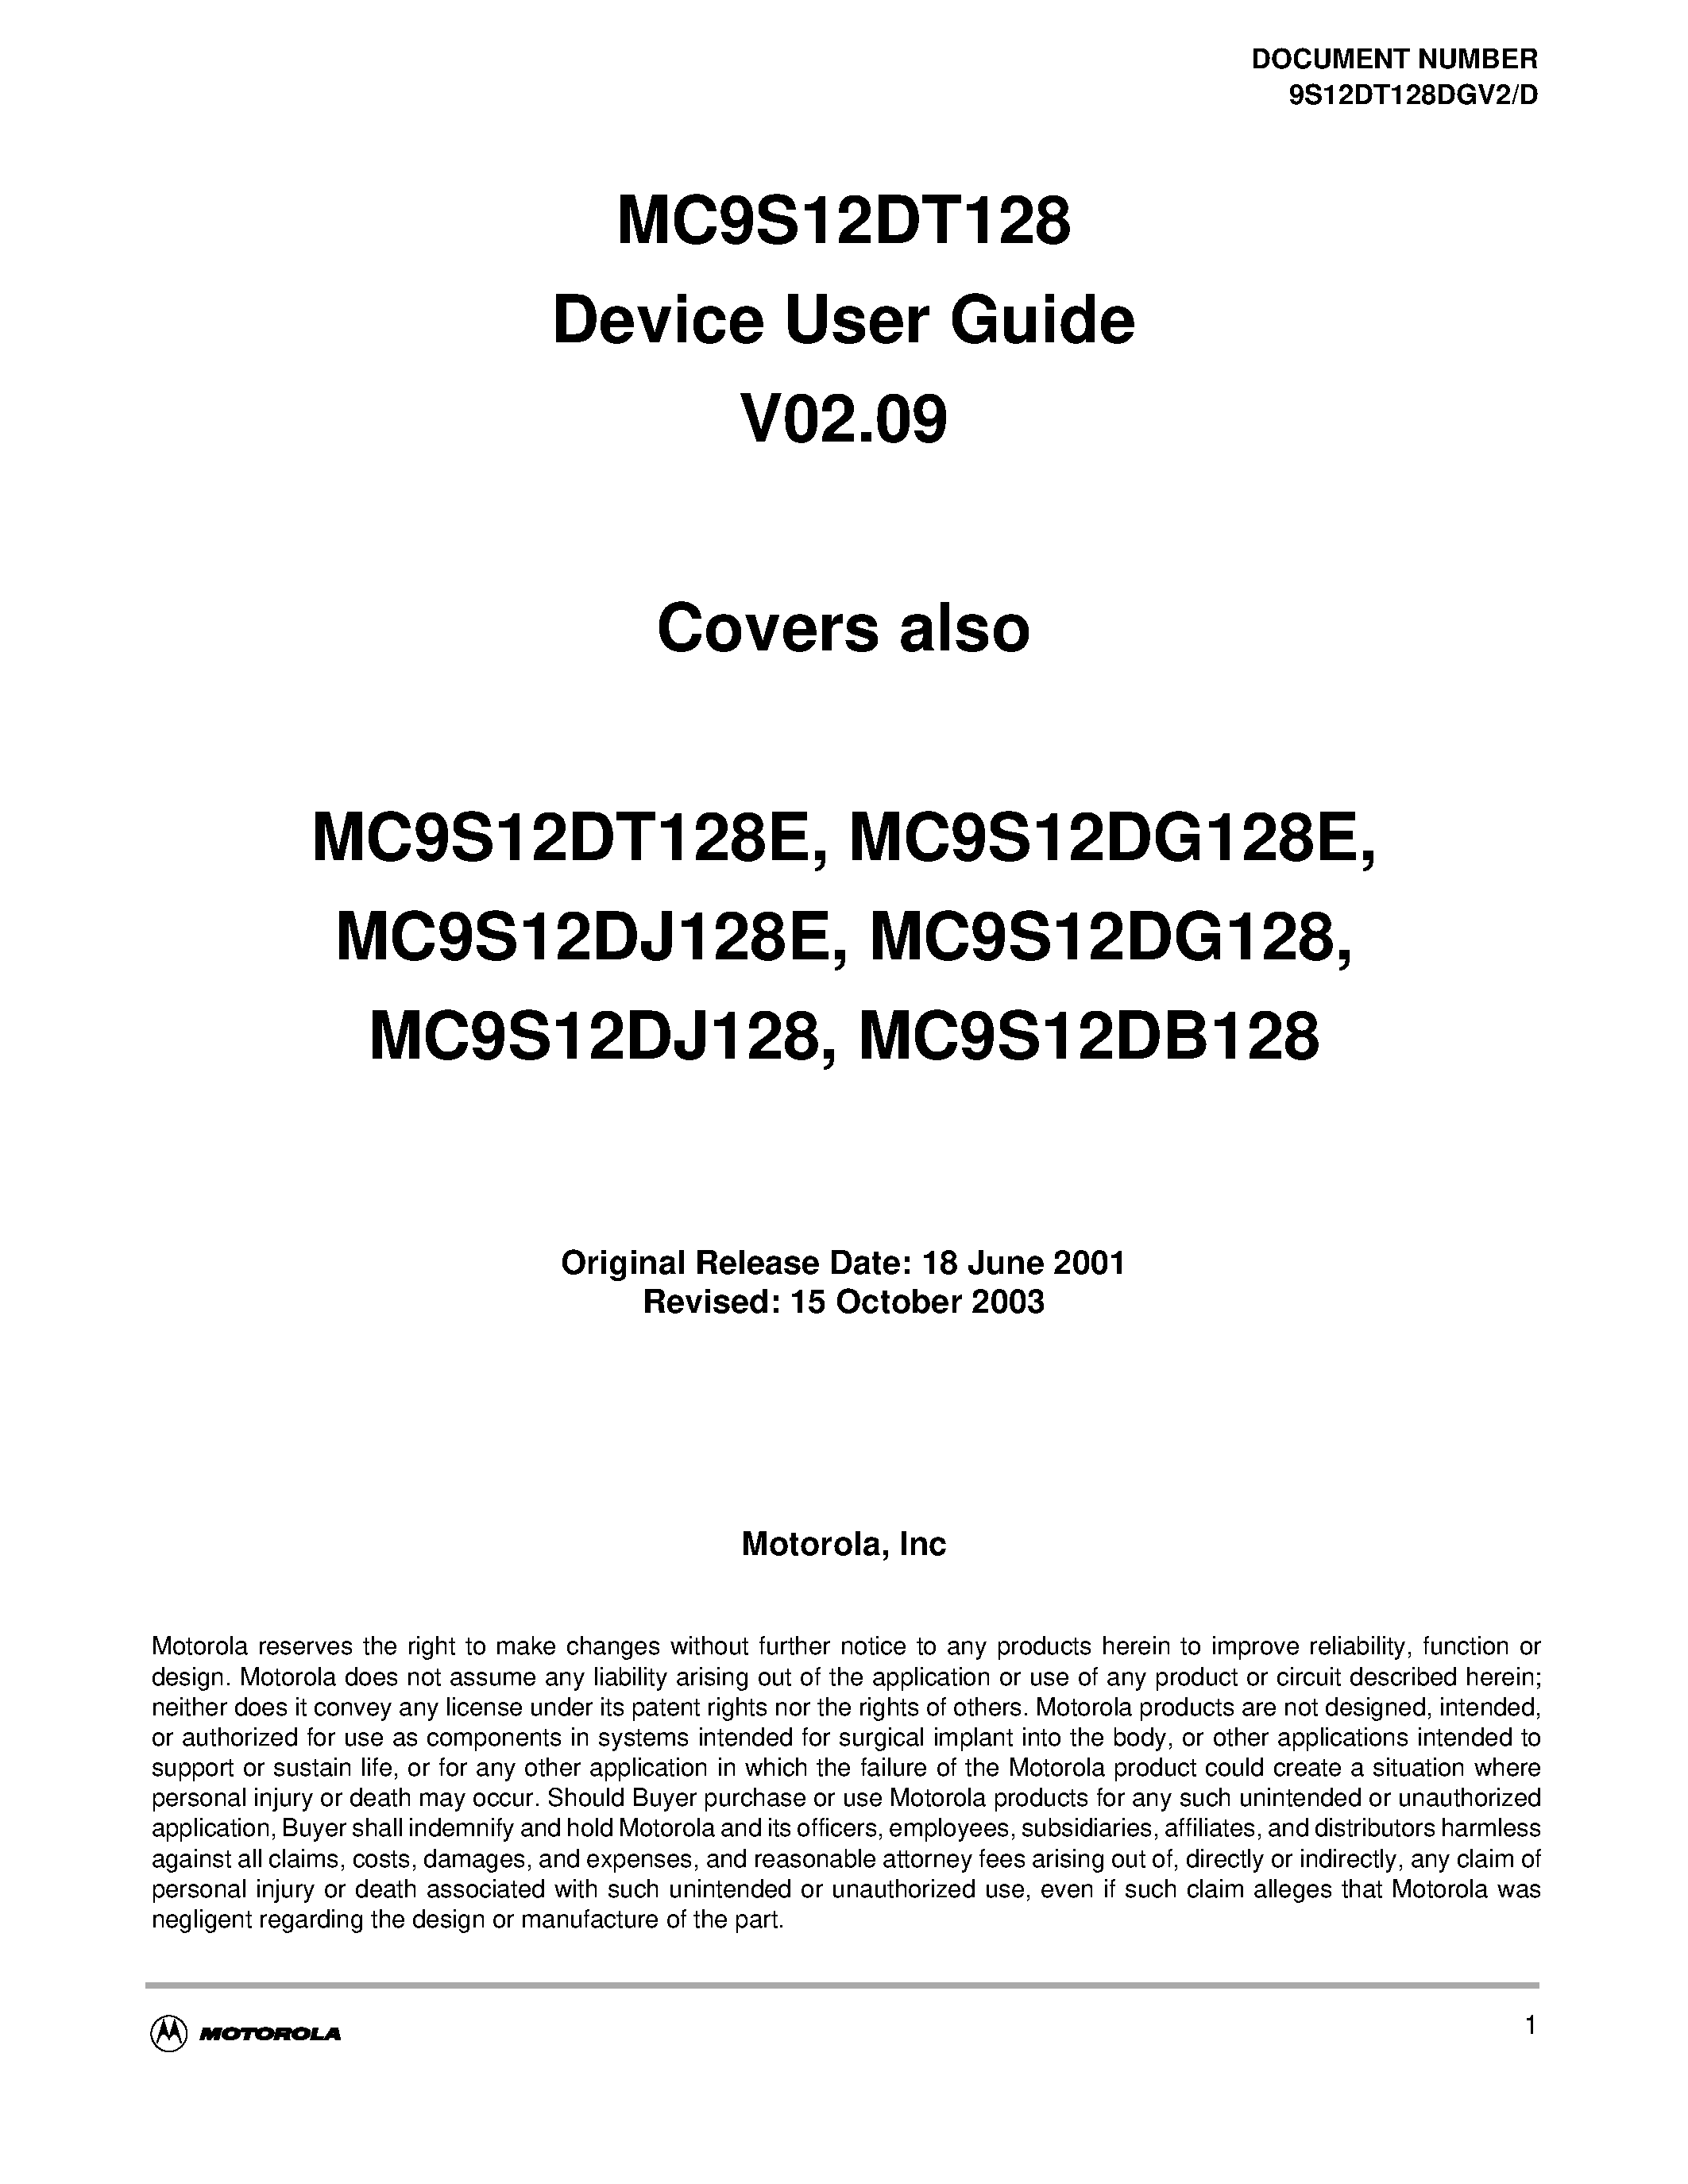 Даташит S12MSCANV2 - MC9S12DT128 Device User Guide V02.09 страница 1